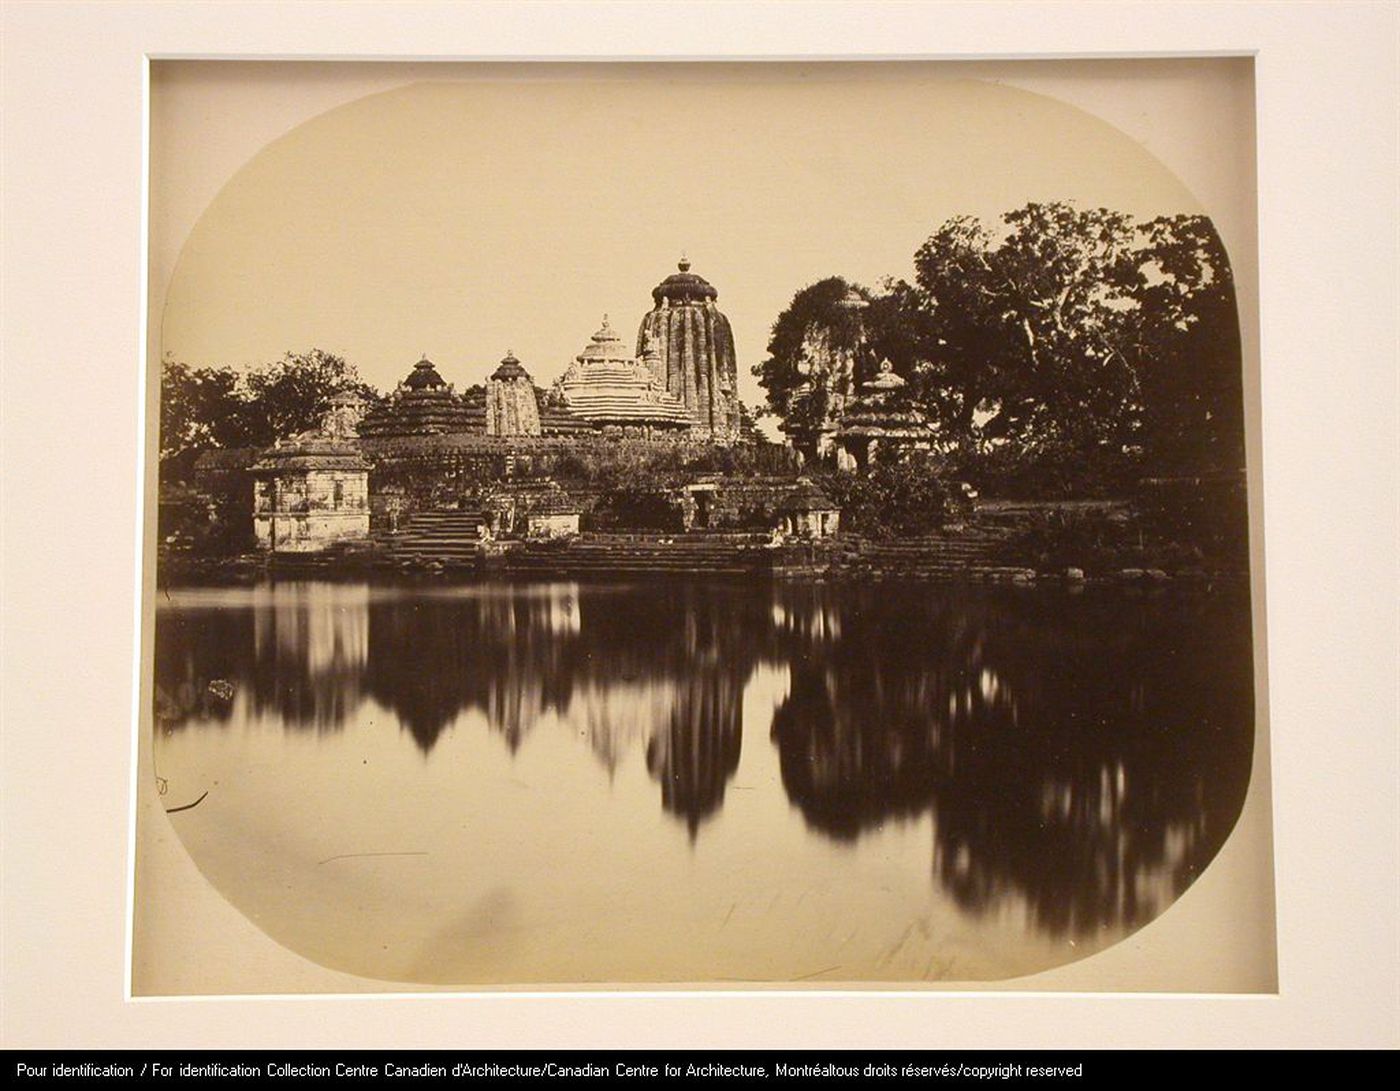 View of the Bindu Sarovar Lake with the Ananta Vasudeva Temple complex in the background, Bhubaneswar, India